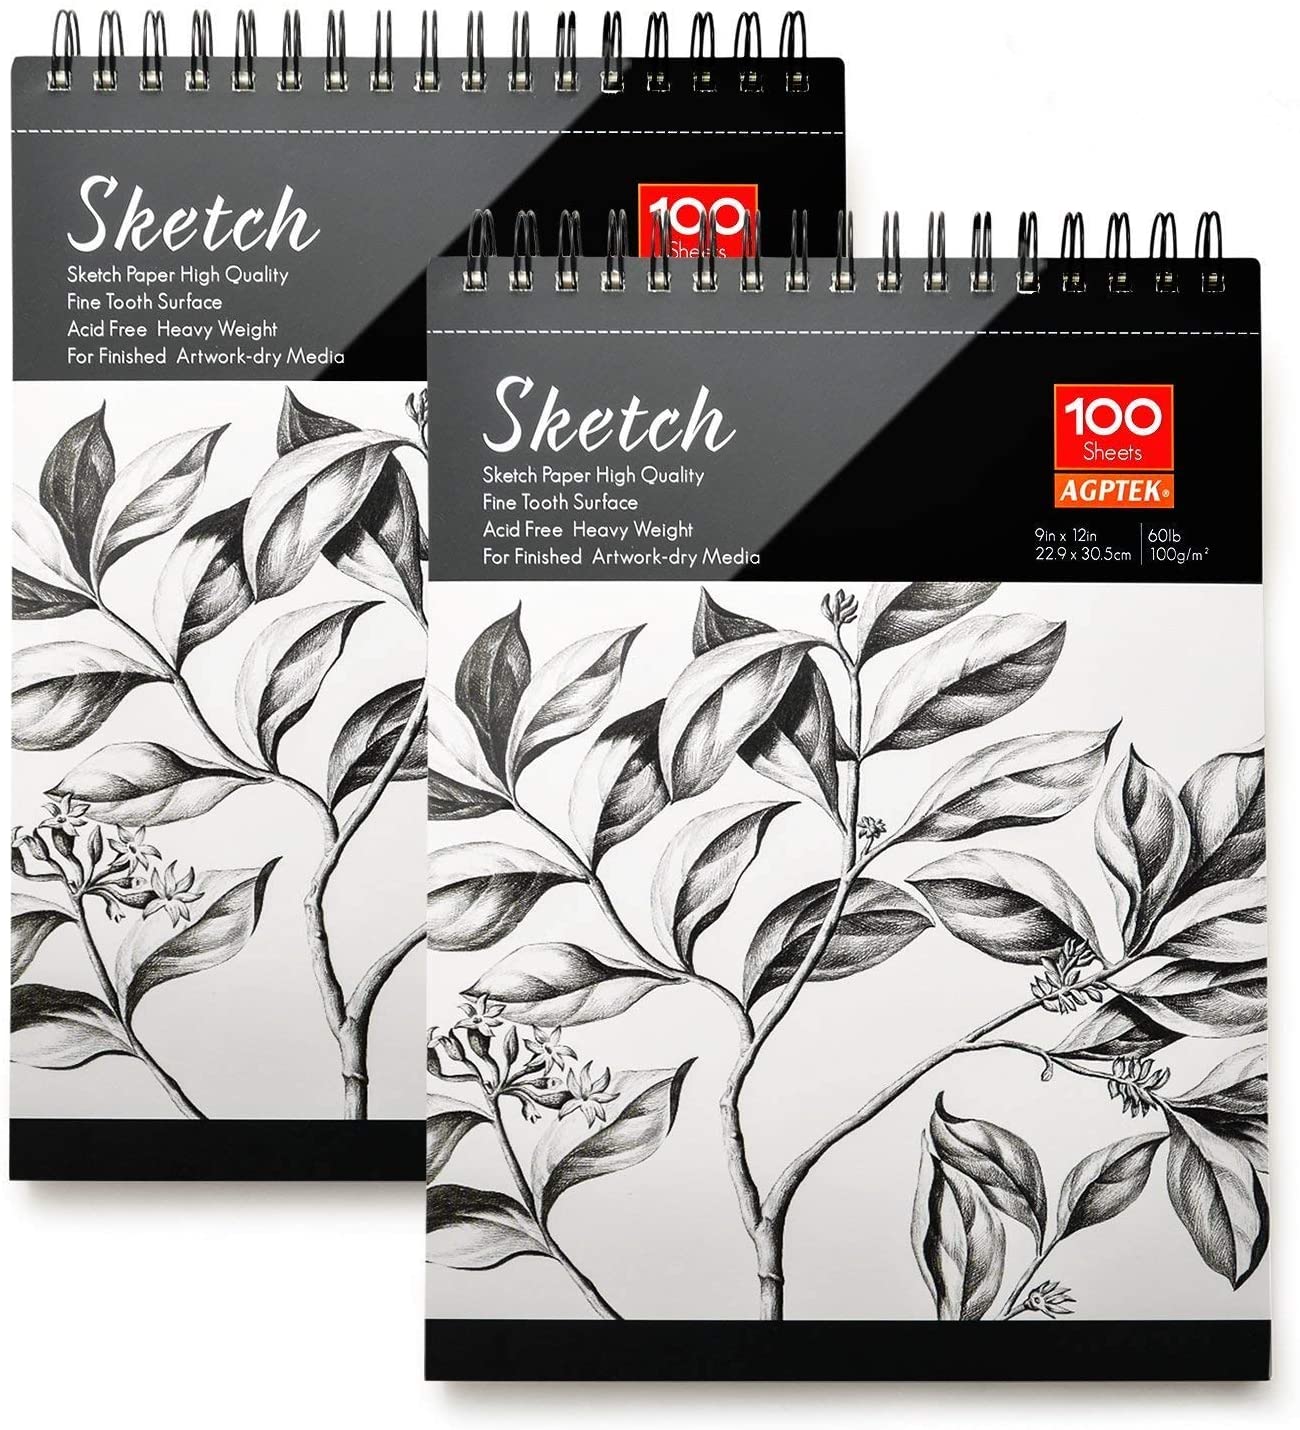 Sketch Book, Sketch Book Set 4 Packs 400 Sheets 5.5 X 8.8 inches  (68lb/100gsm) Spiral Bound Professional Sketch Book Set